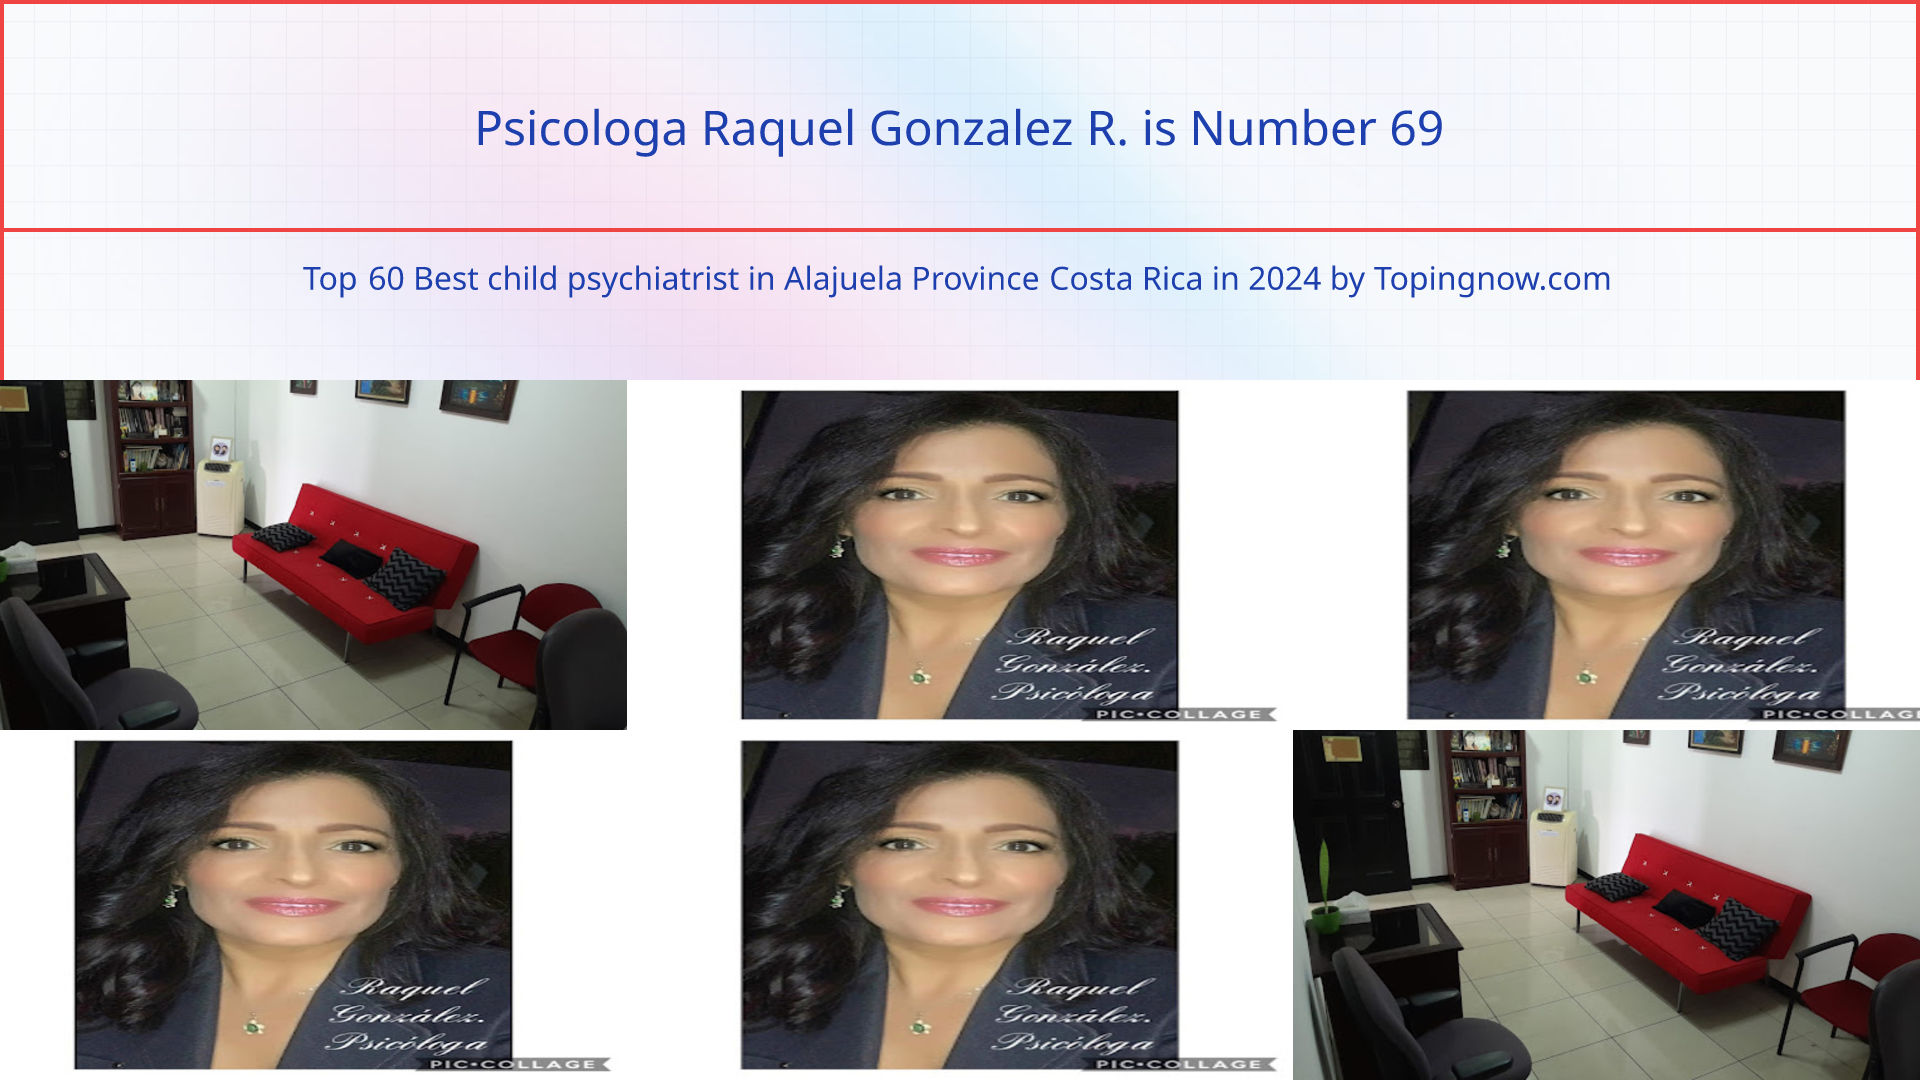 Psicologa Raquel Gonzalez R.: Top 60 Best child psychiatrist in Alajuela Province Costa Rica in 2024